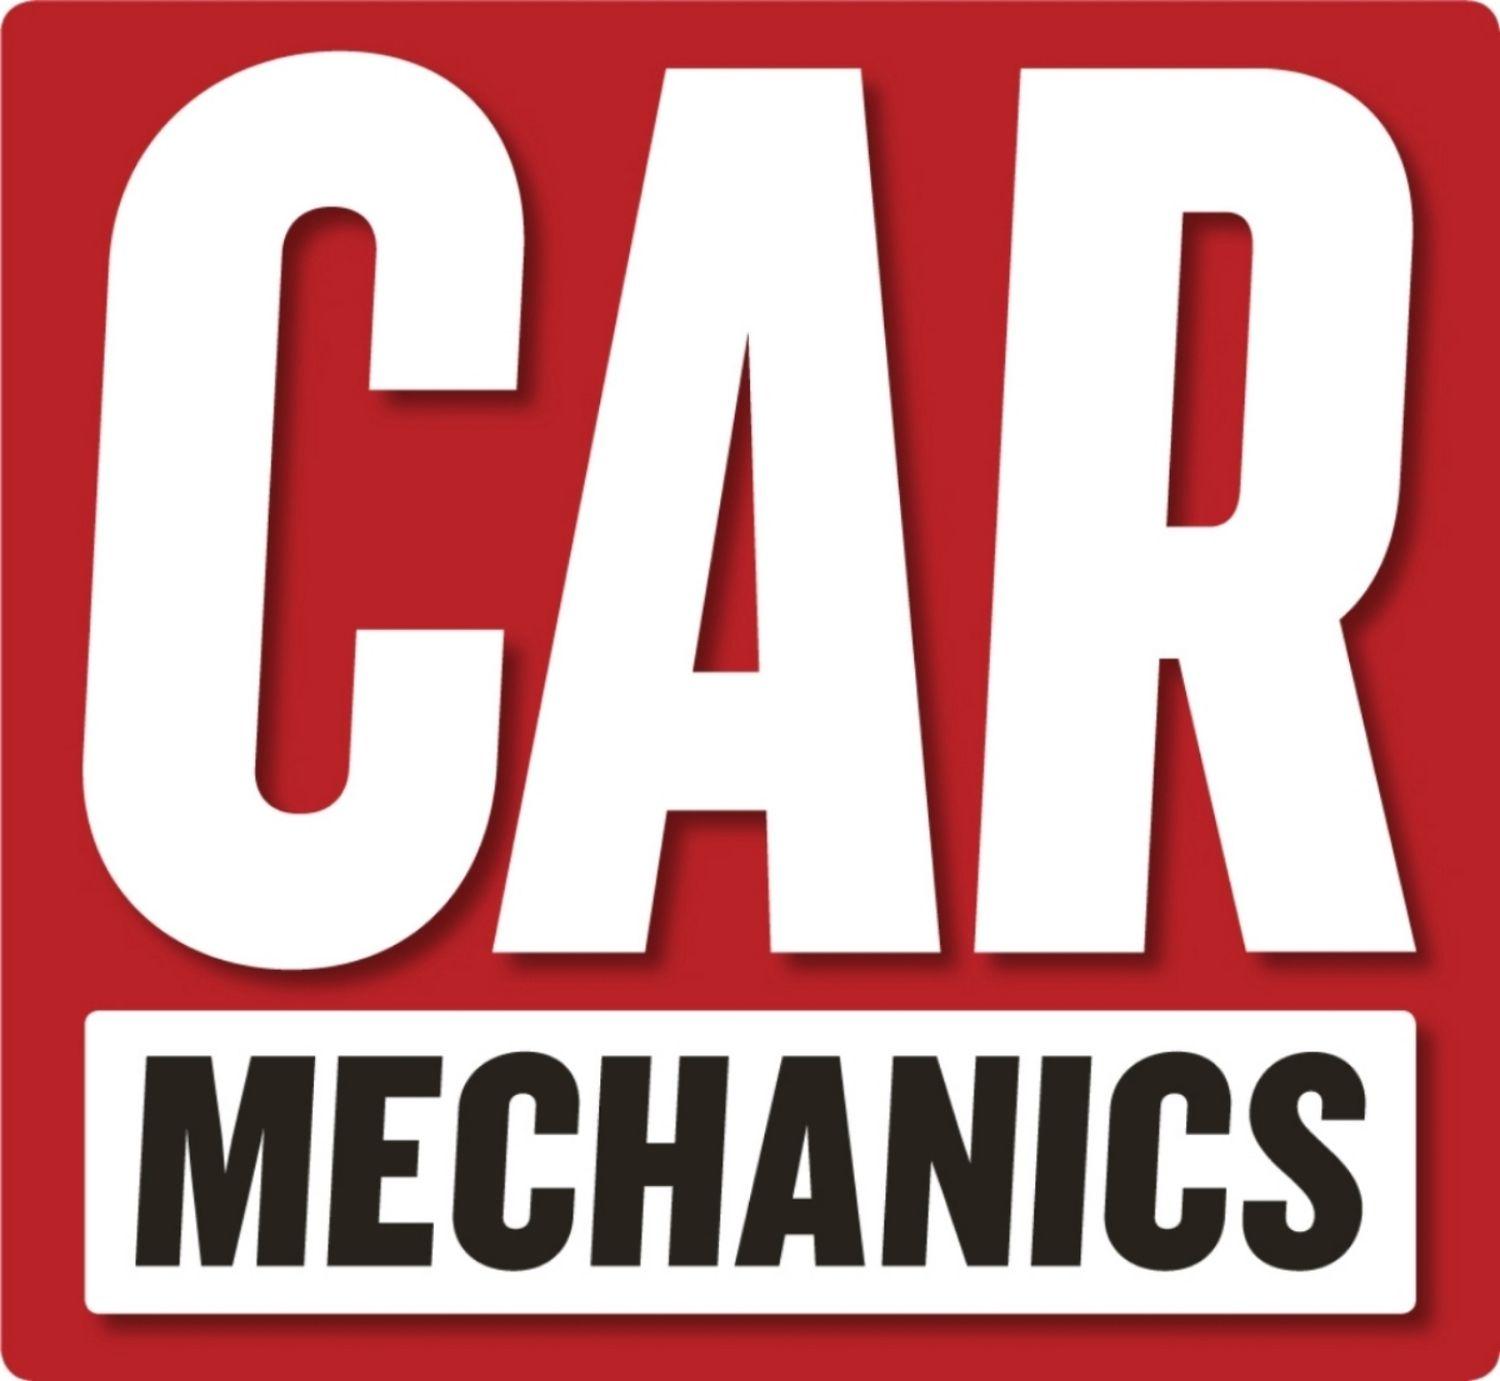 Mechanic Auto Repair Logo - Back Issues